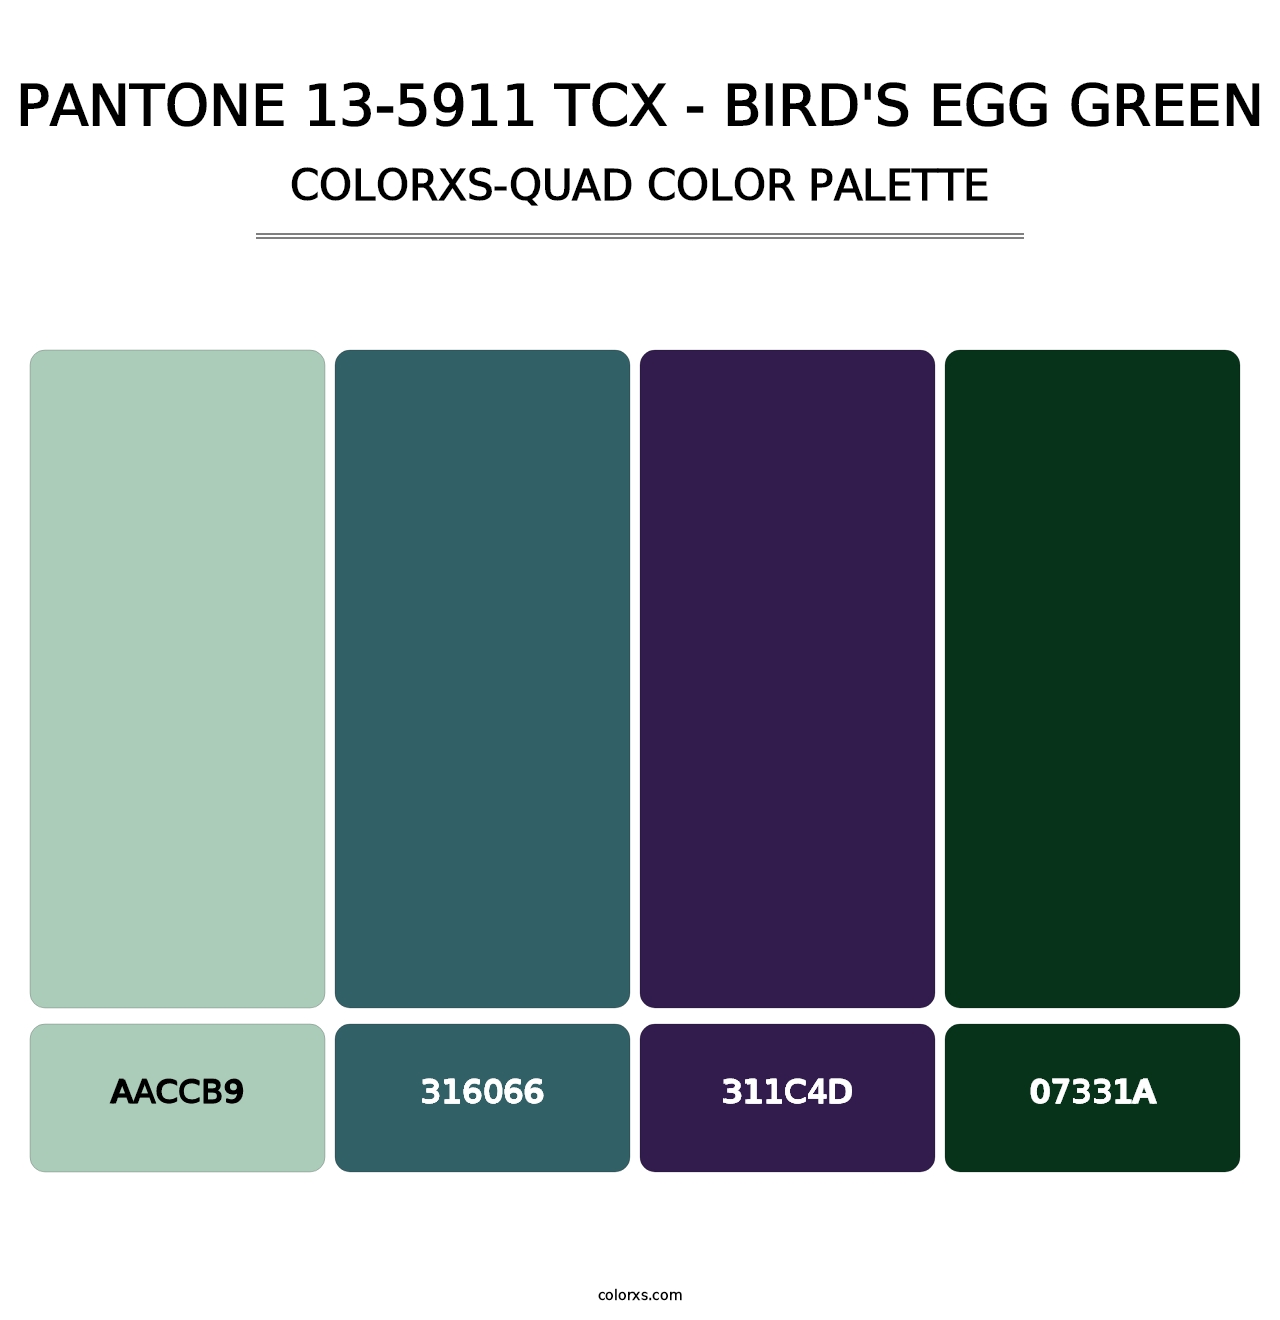 PANTONE 13-5911 TCX - Bird's Egg Green - Colorxs Quad Palette